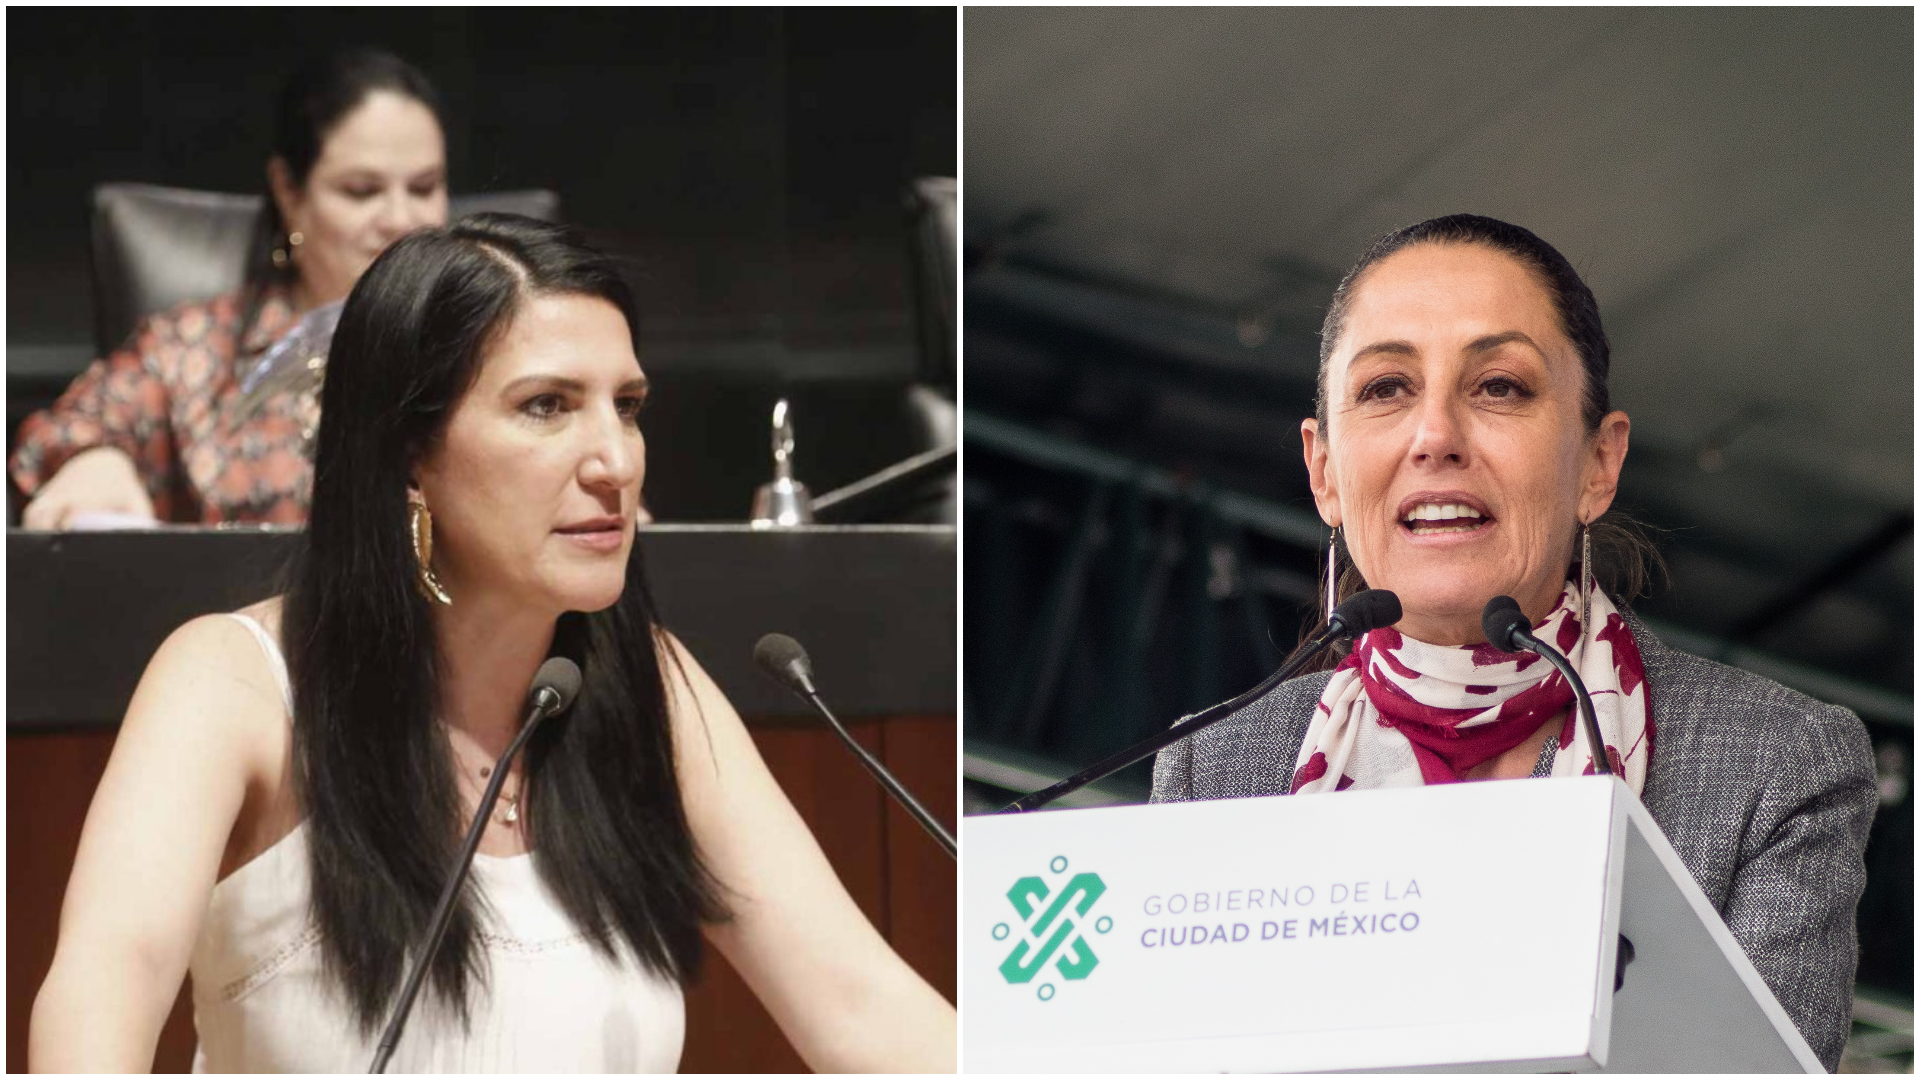 Kenia López Rabadán launched herself against Claudia Sheinbaum for a concert in the Zócalo (Photos: Senate / CDMX Culture)